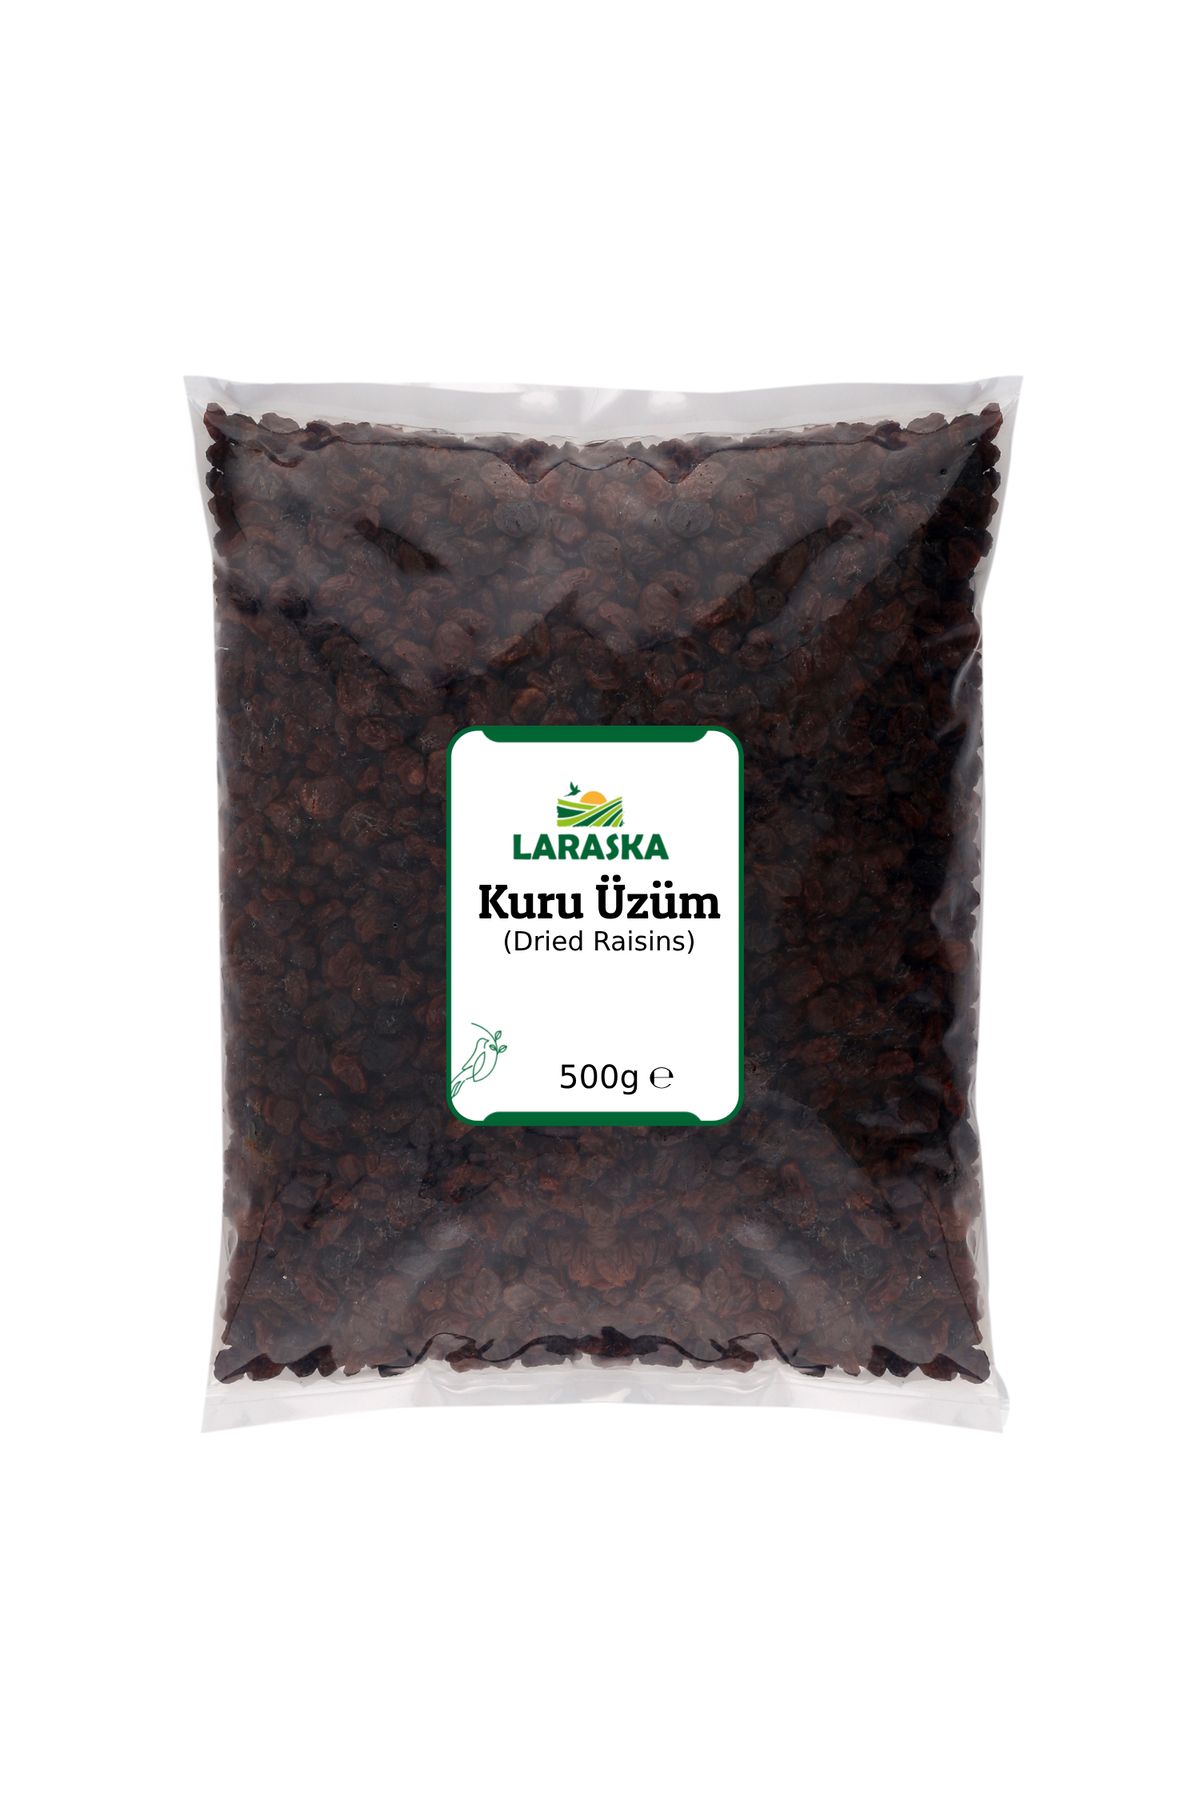 Laraska Kuru Üzüm 500g - Dried Raisins 500g